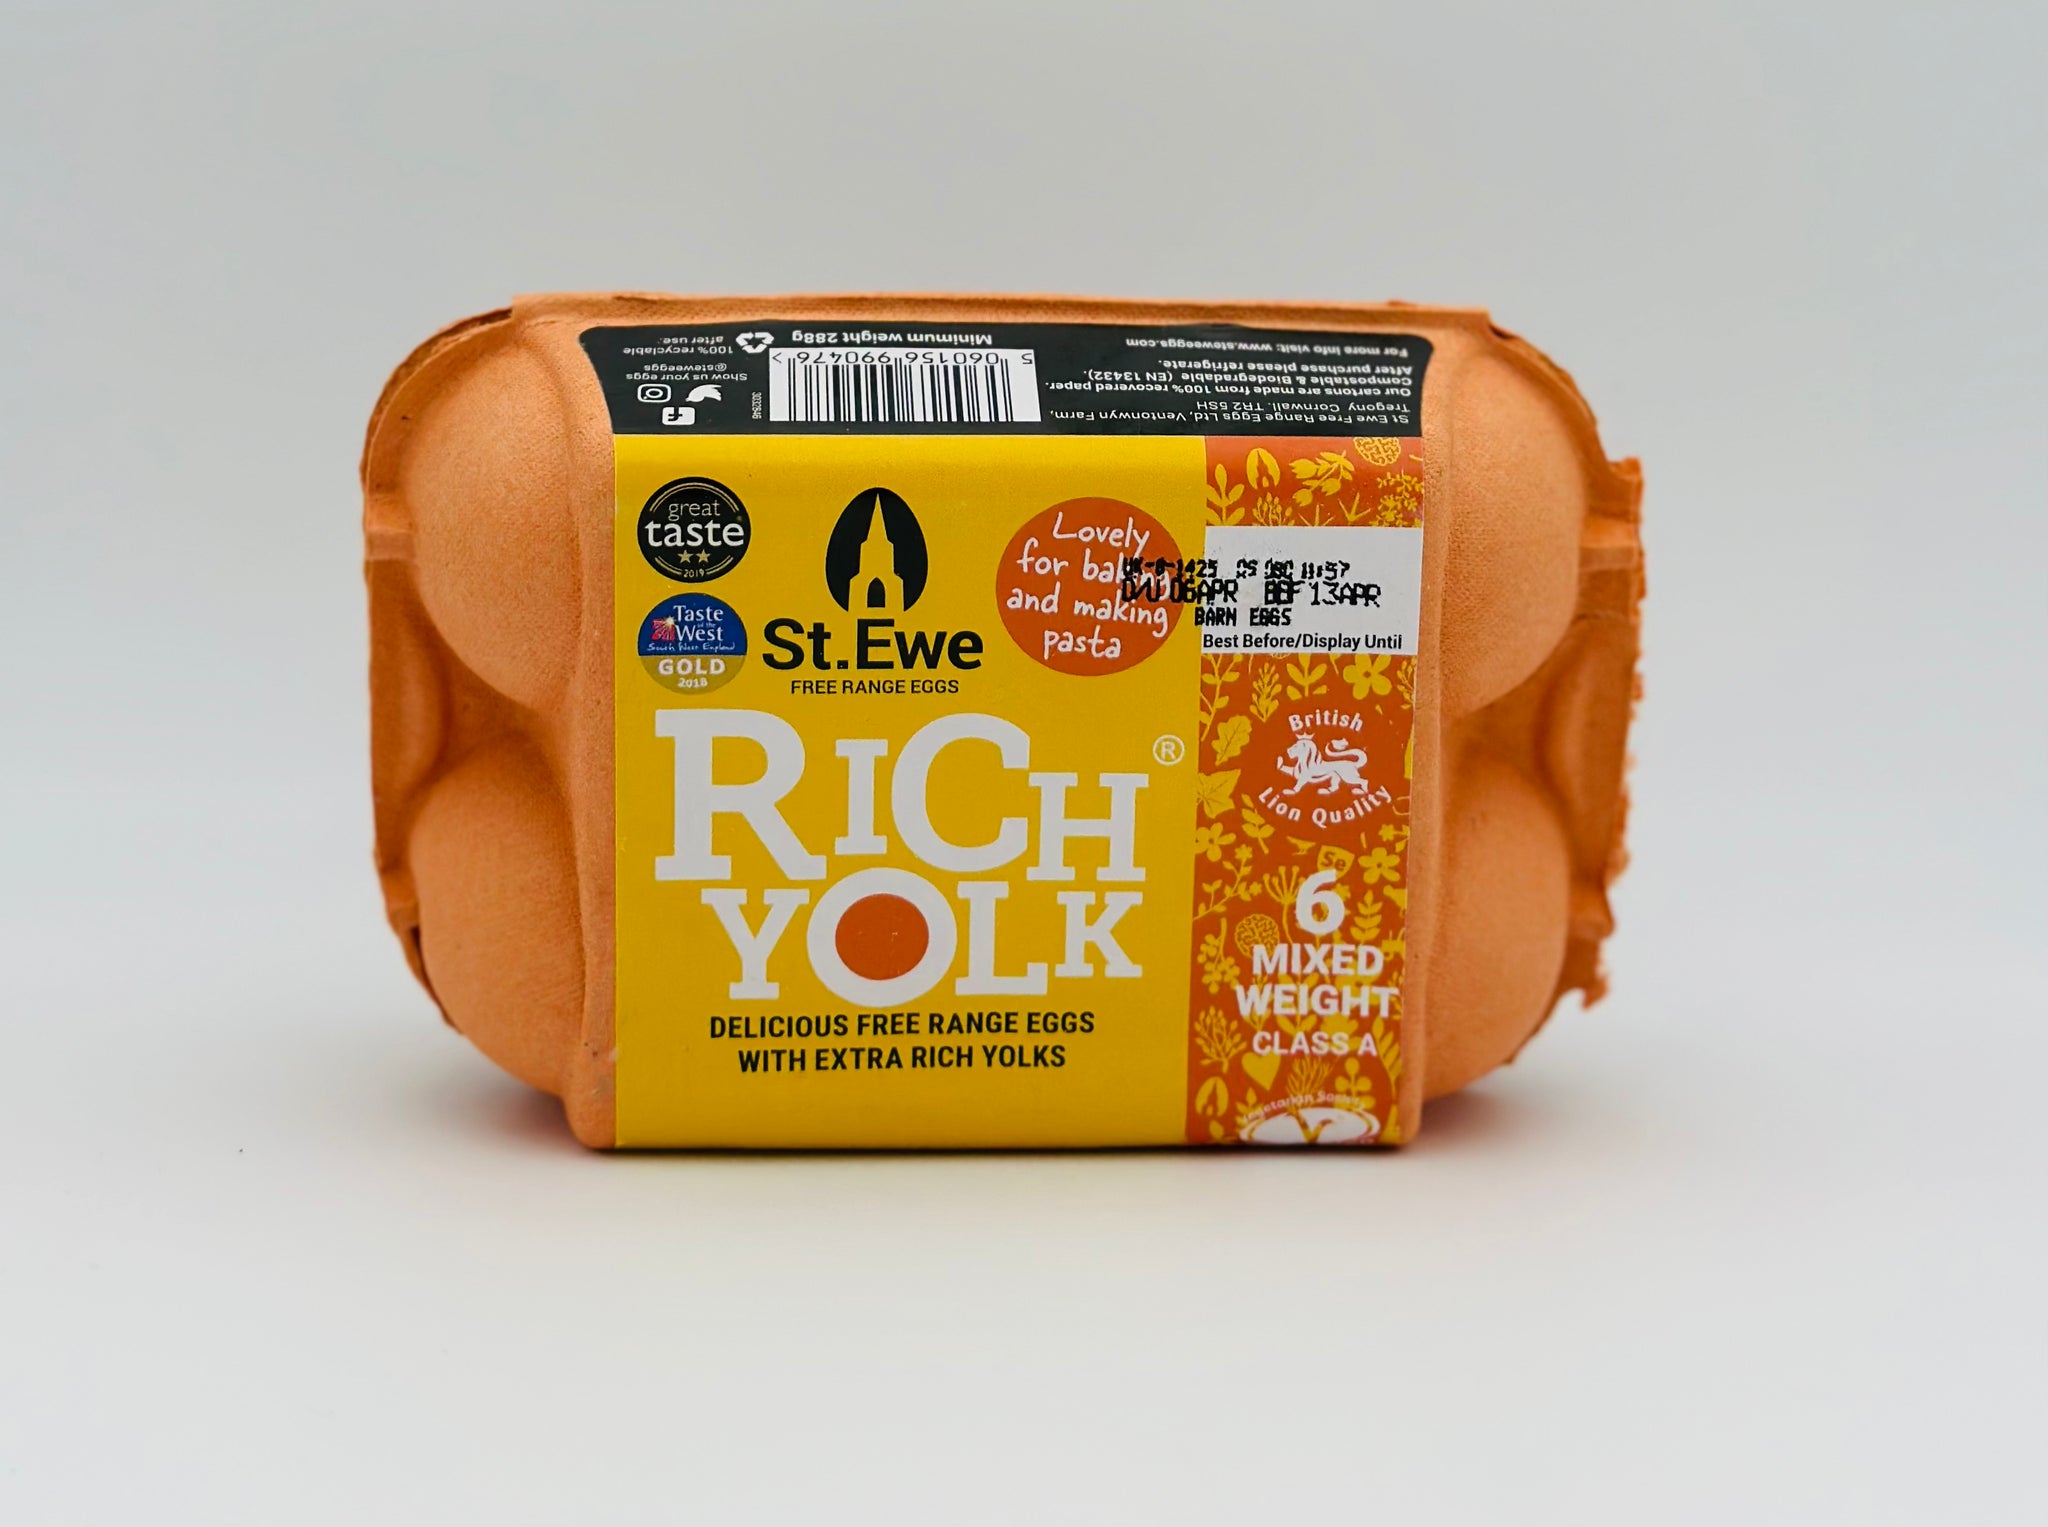 Rich Yolk Free Range Eggs